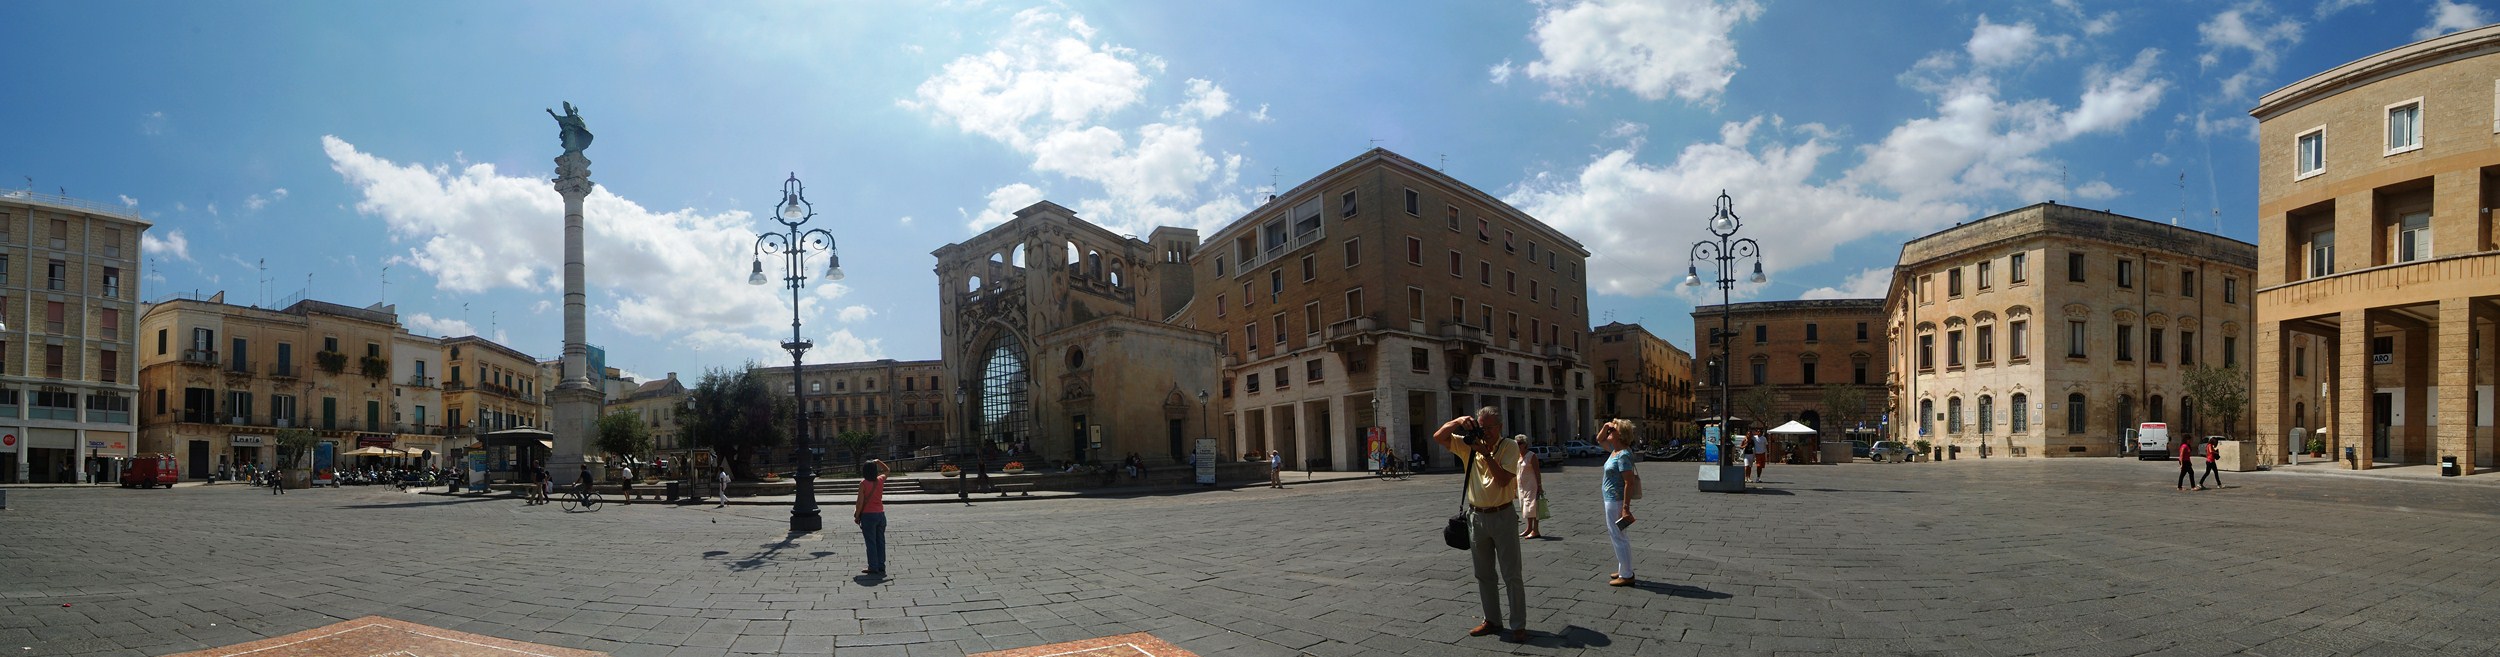 Piazza Oronzo.jpg